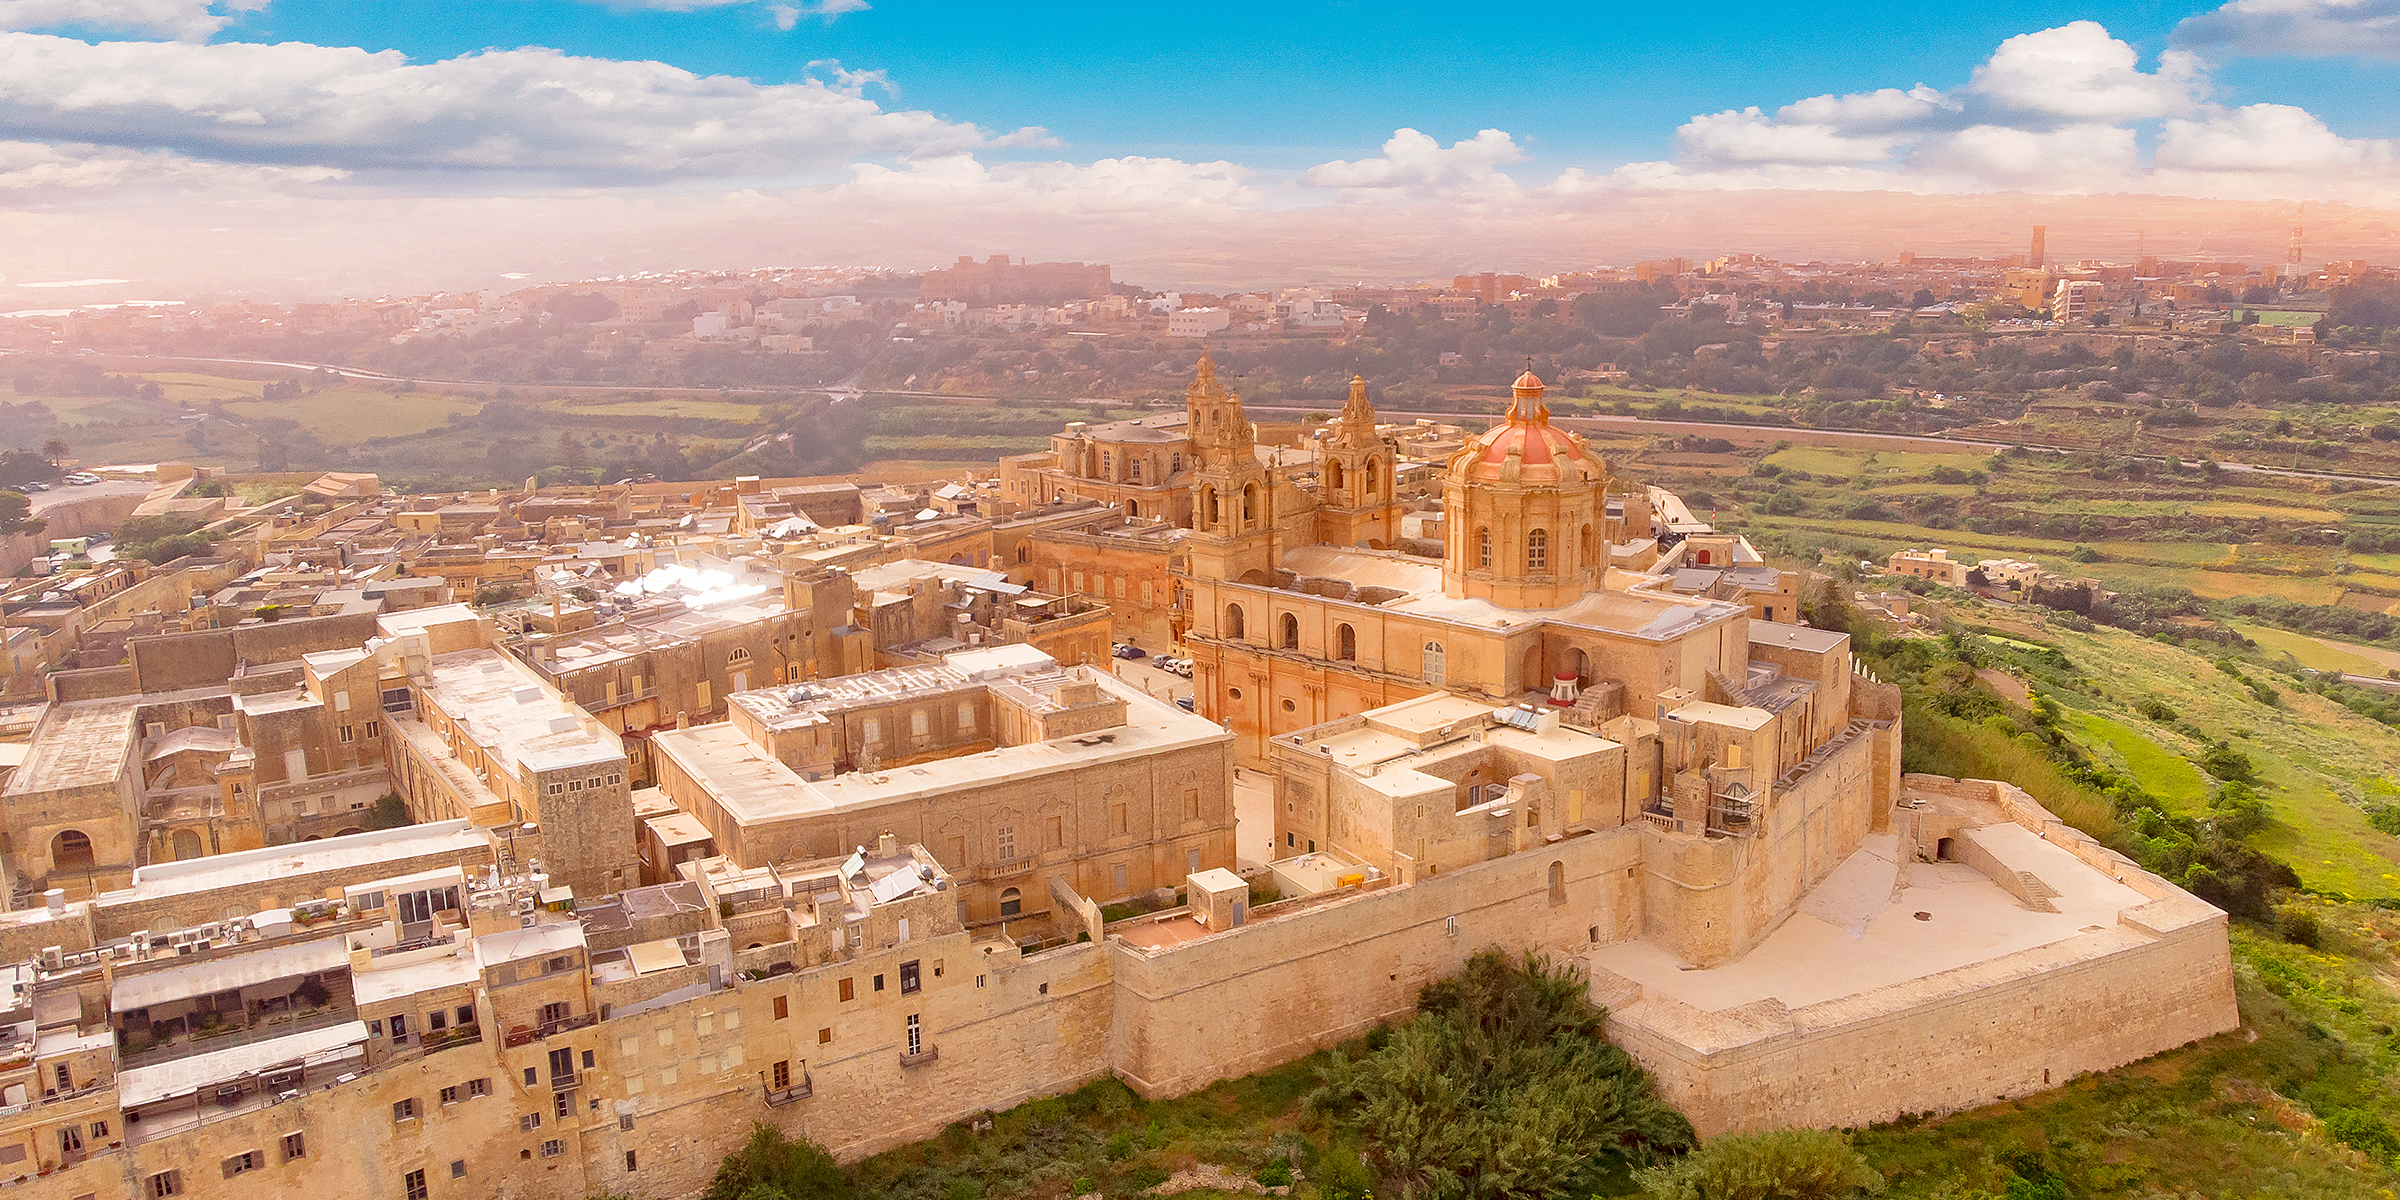 "Game of Thrones" filming location in Malta | Source: Shutterstock